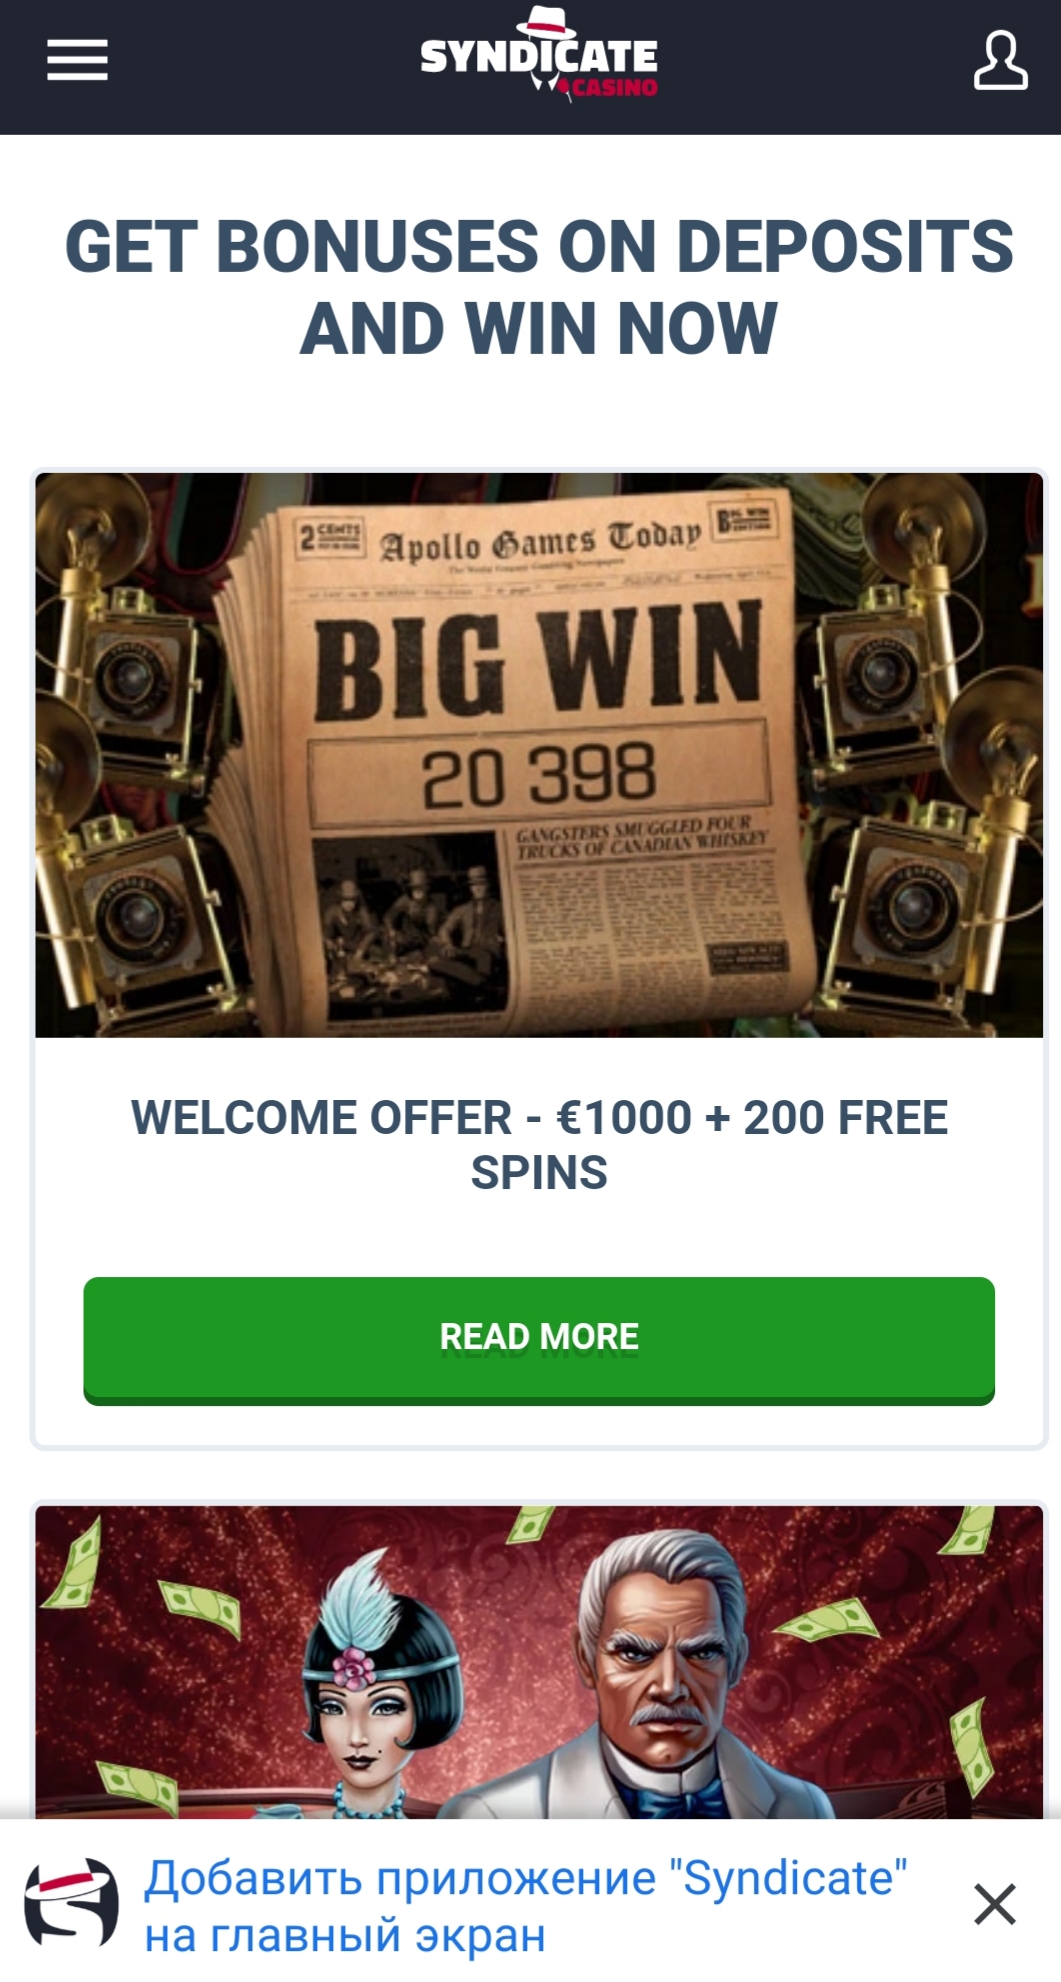 Syndicate Casino Mobile No Deposit Bonus Review